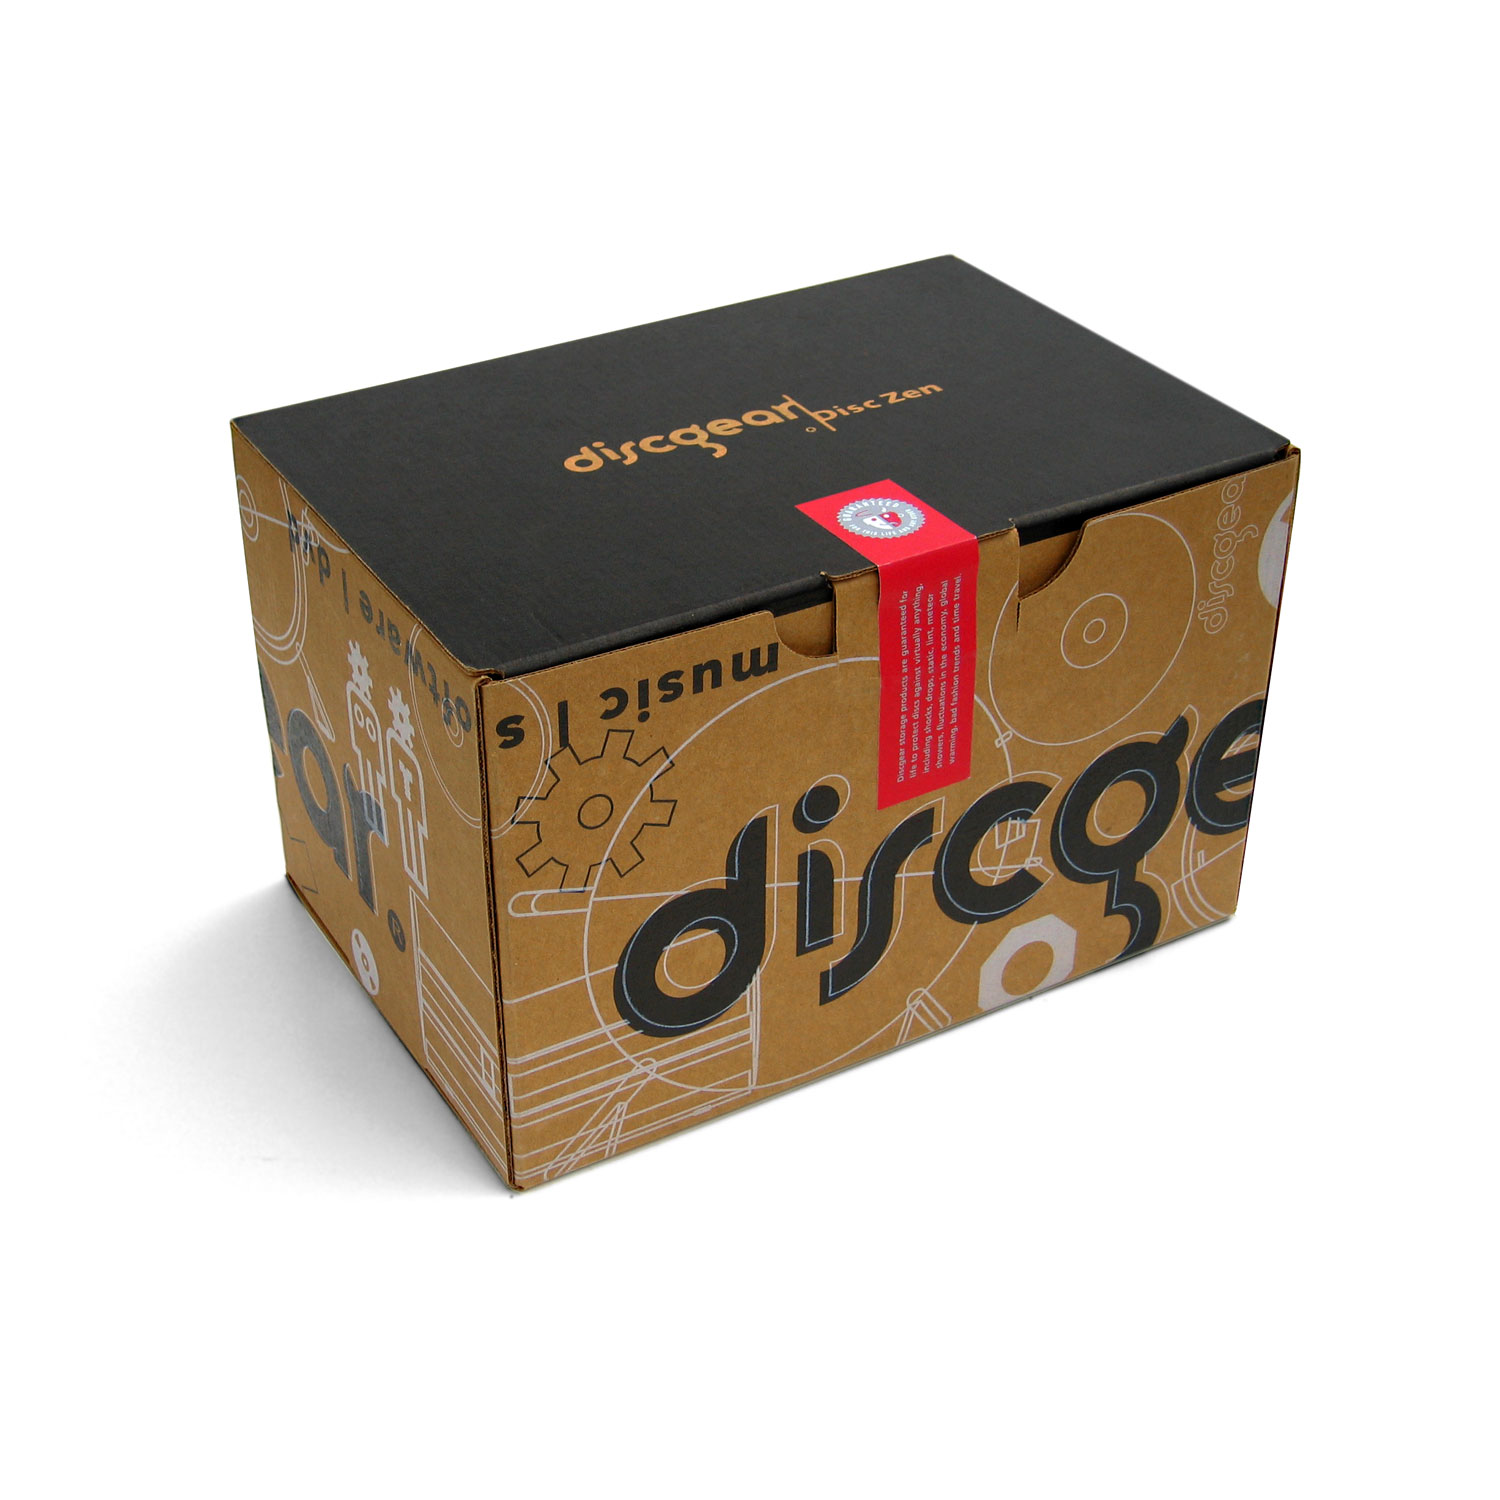 DTC Consumer Packaging Design